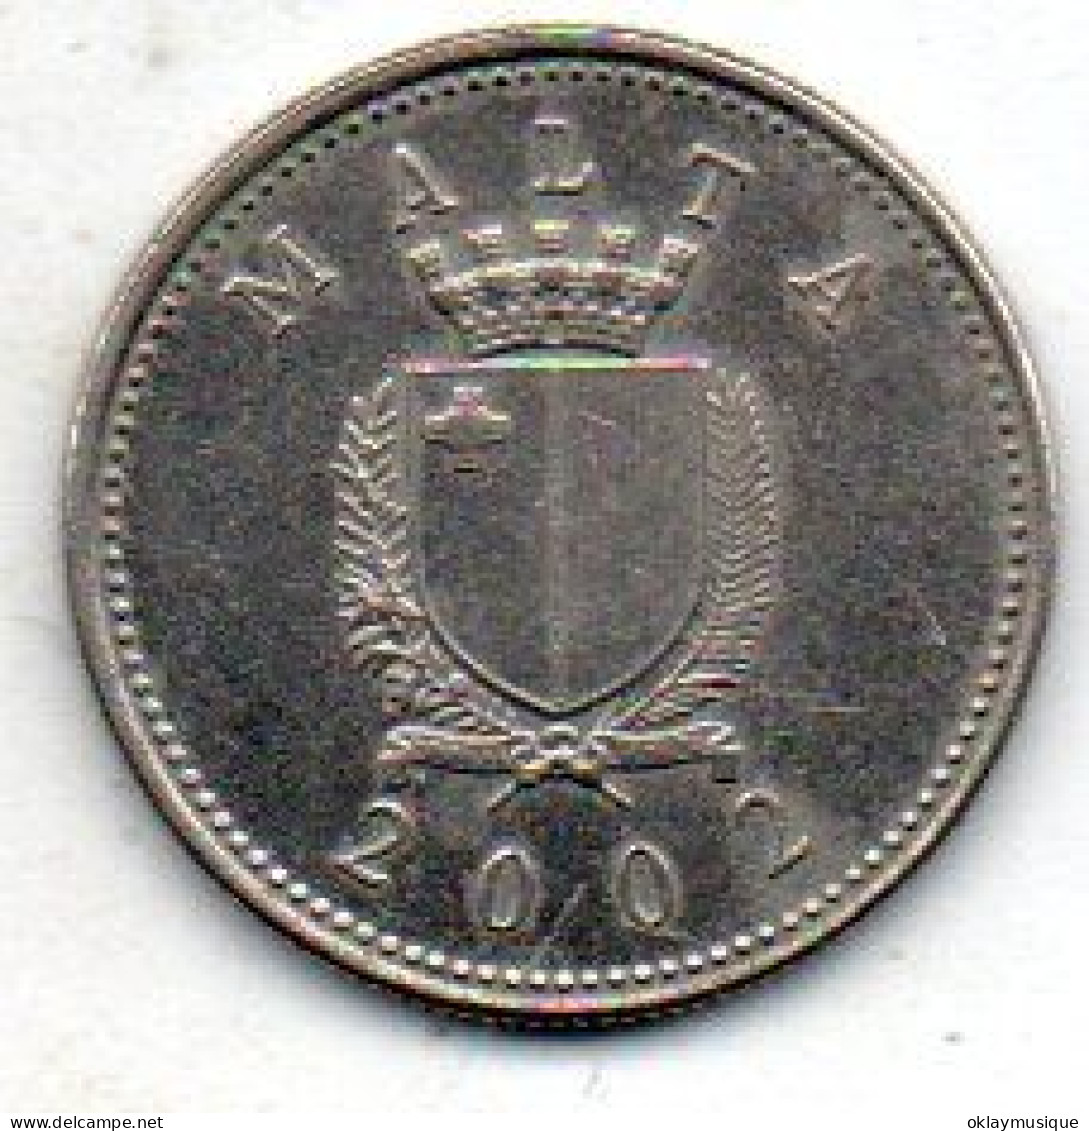 2 Cents 2002 - Malte